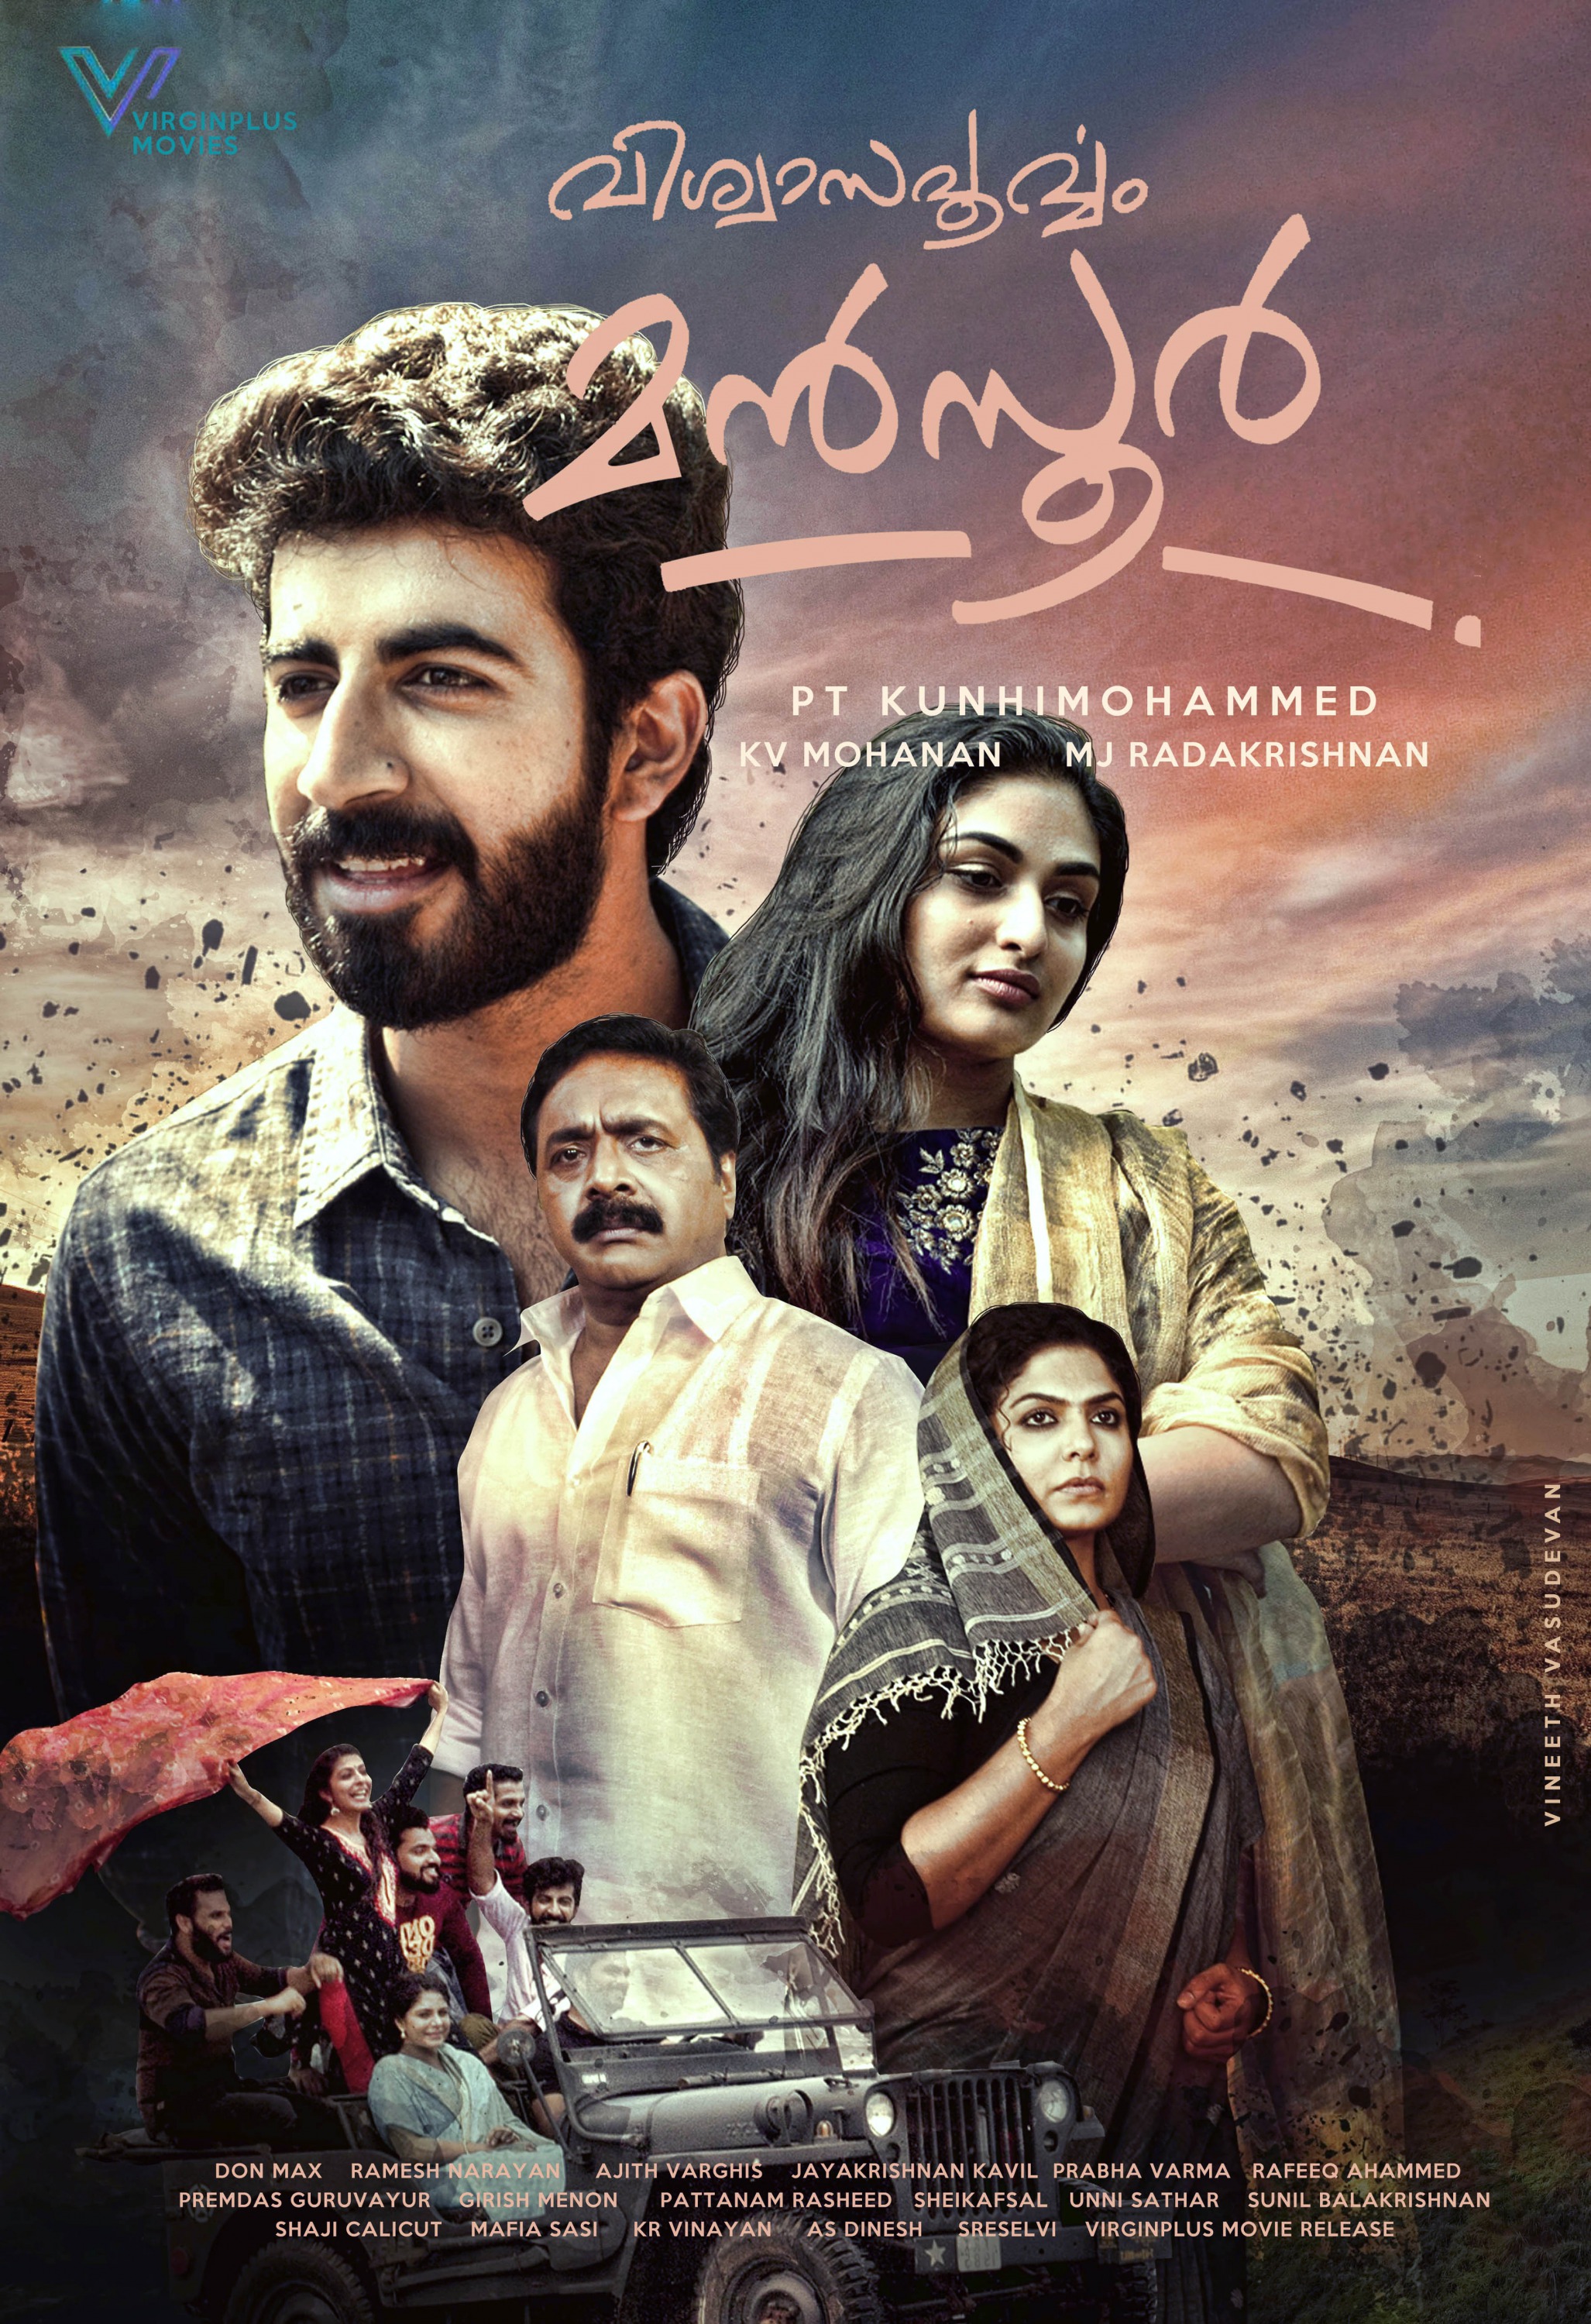 Mega Sized Movie Poster Image for Viswasapoorvam Mansoor (#2 of 3)